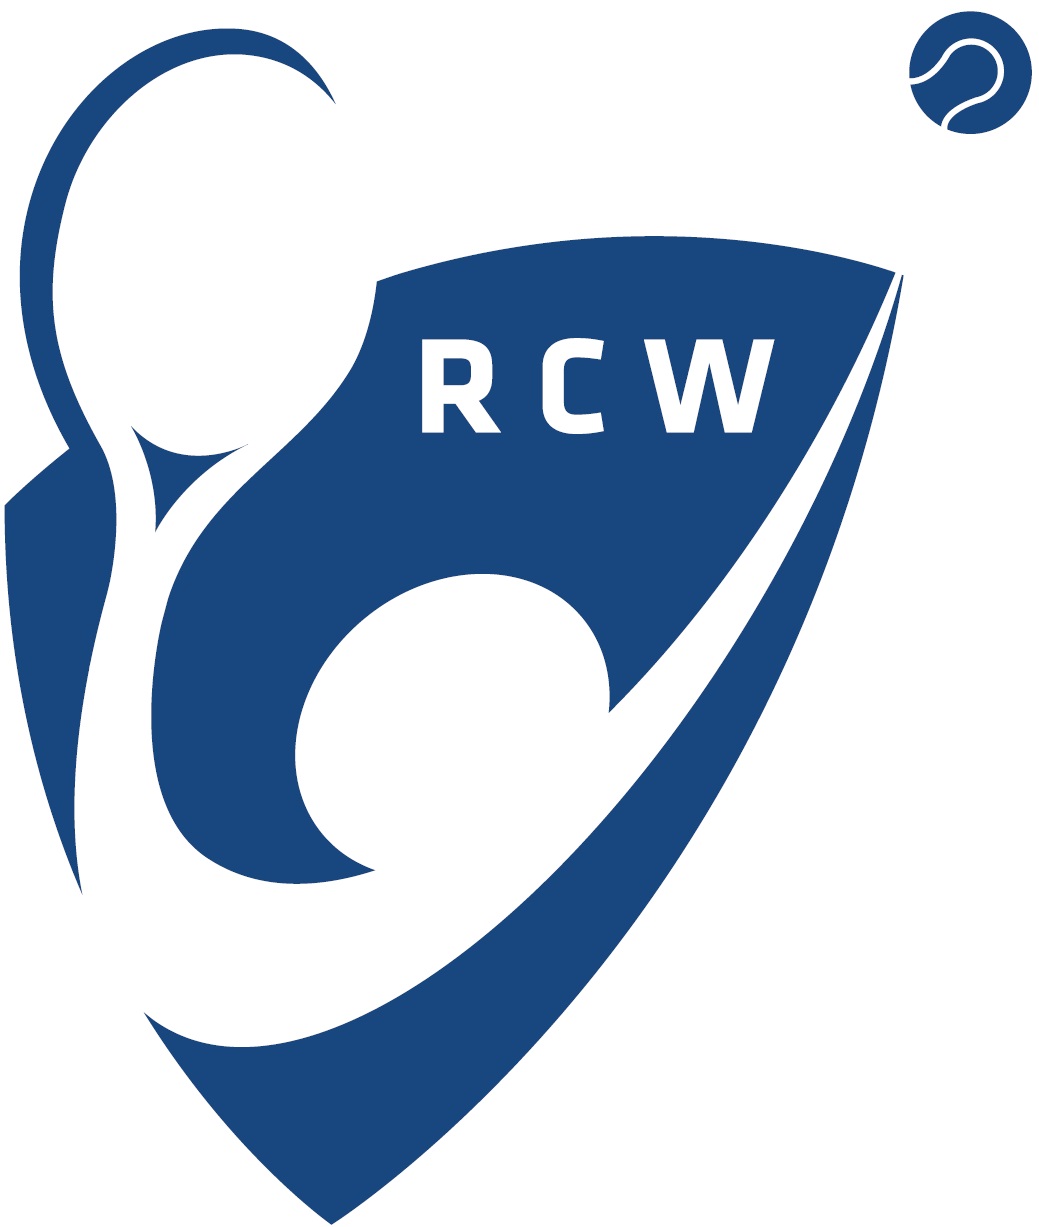 Logo RacketClub Westerbork